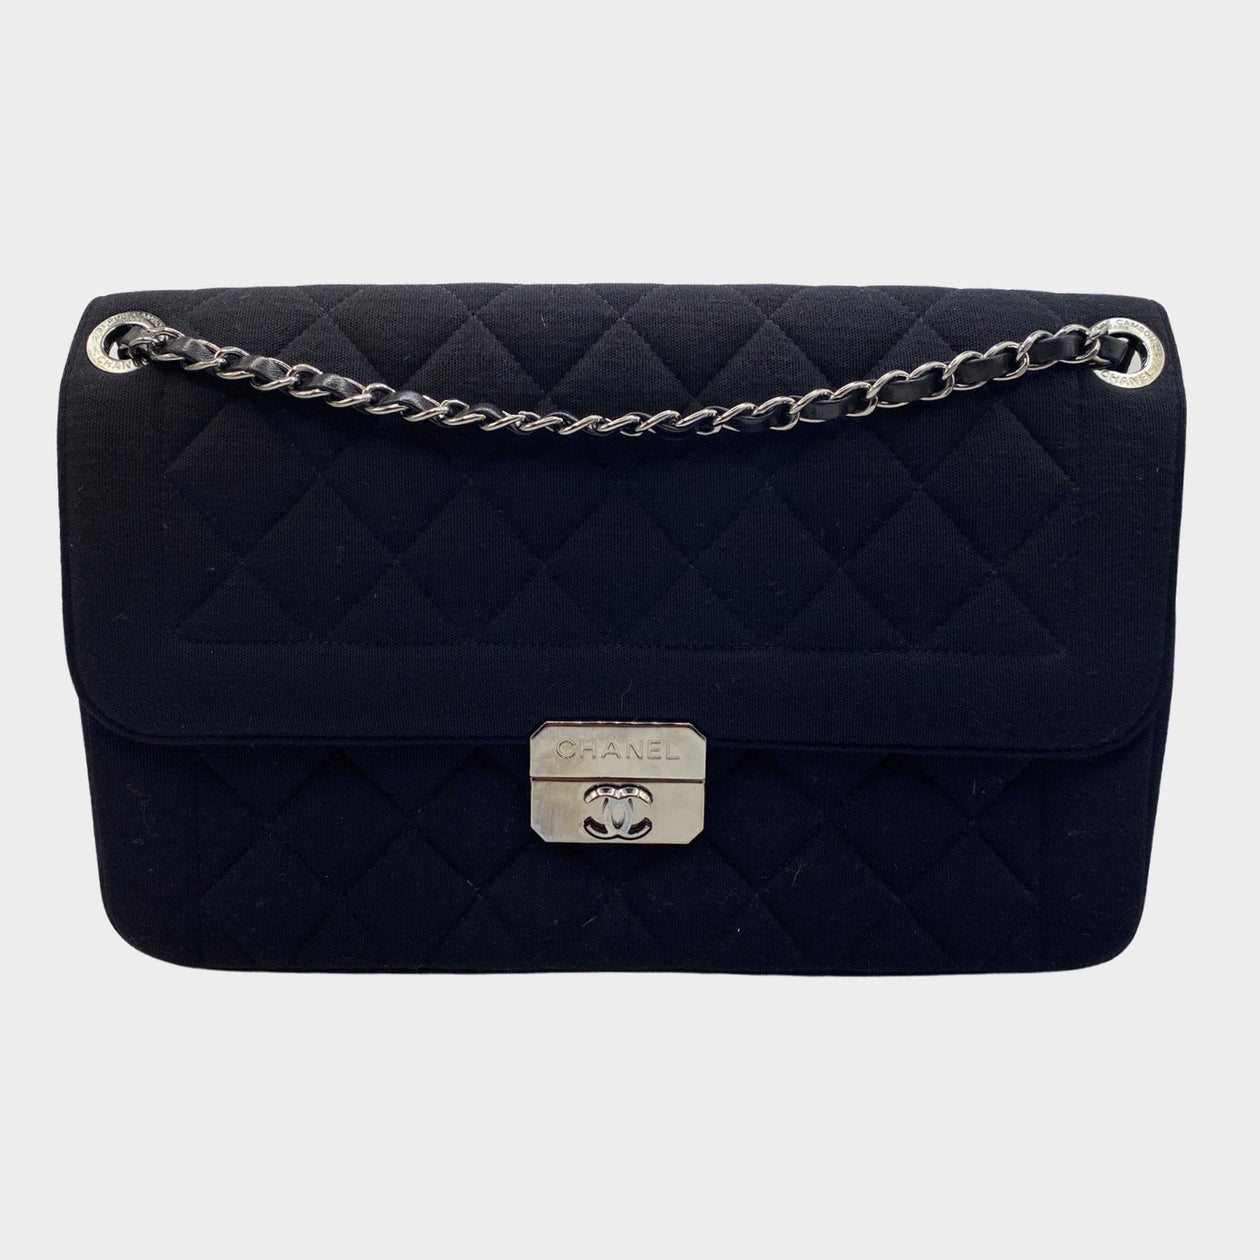 Chanel - Authenticated 2.55 Handbag - Plastic Black Plain for Women, Good Condition